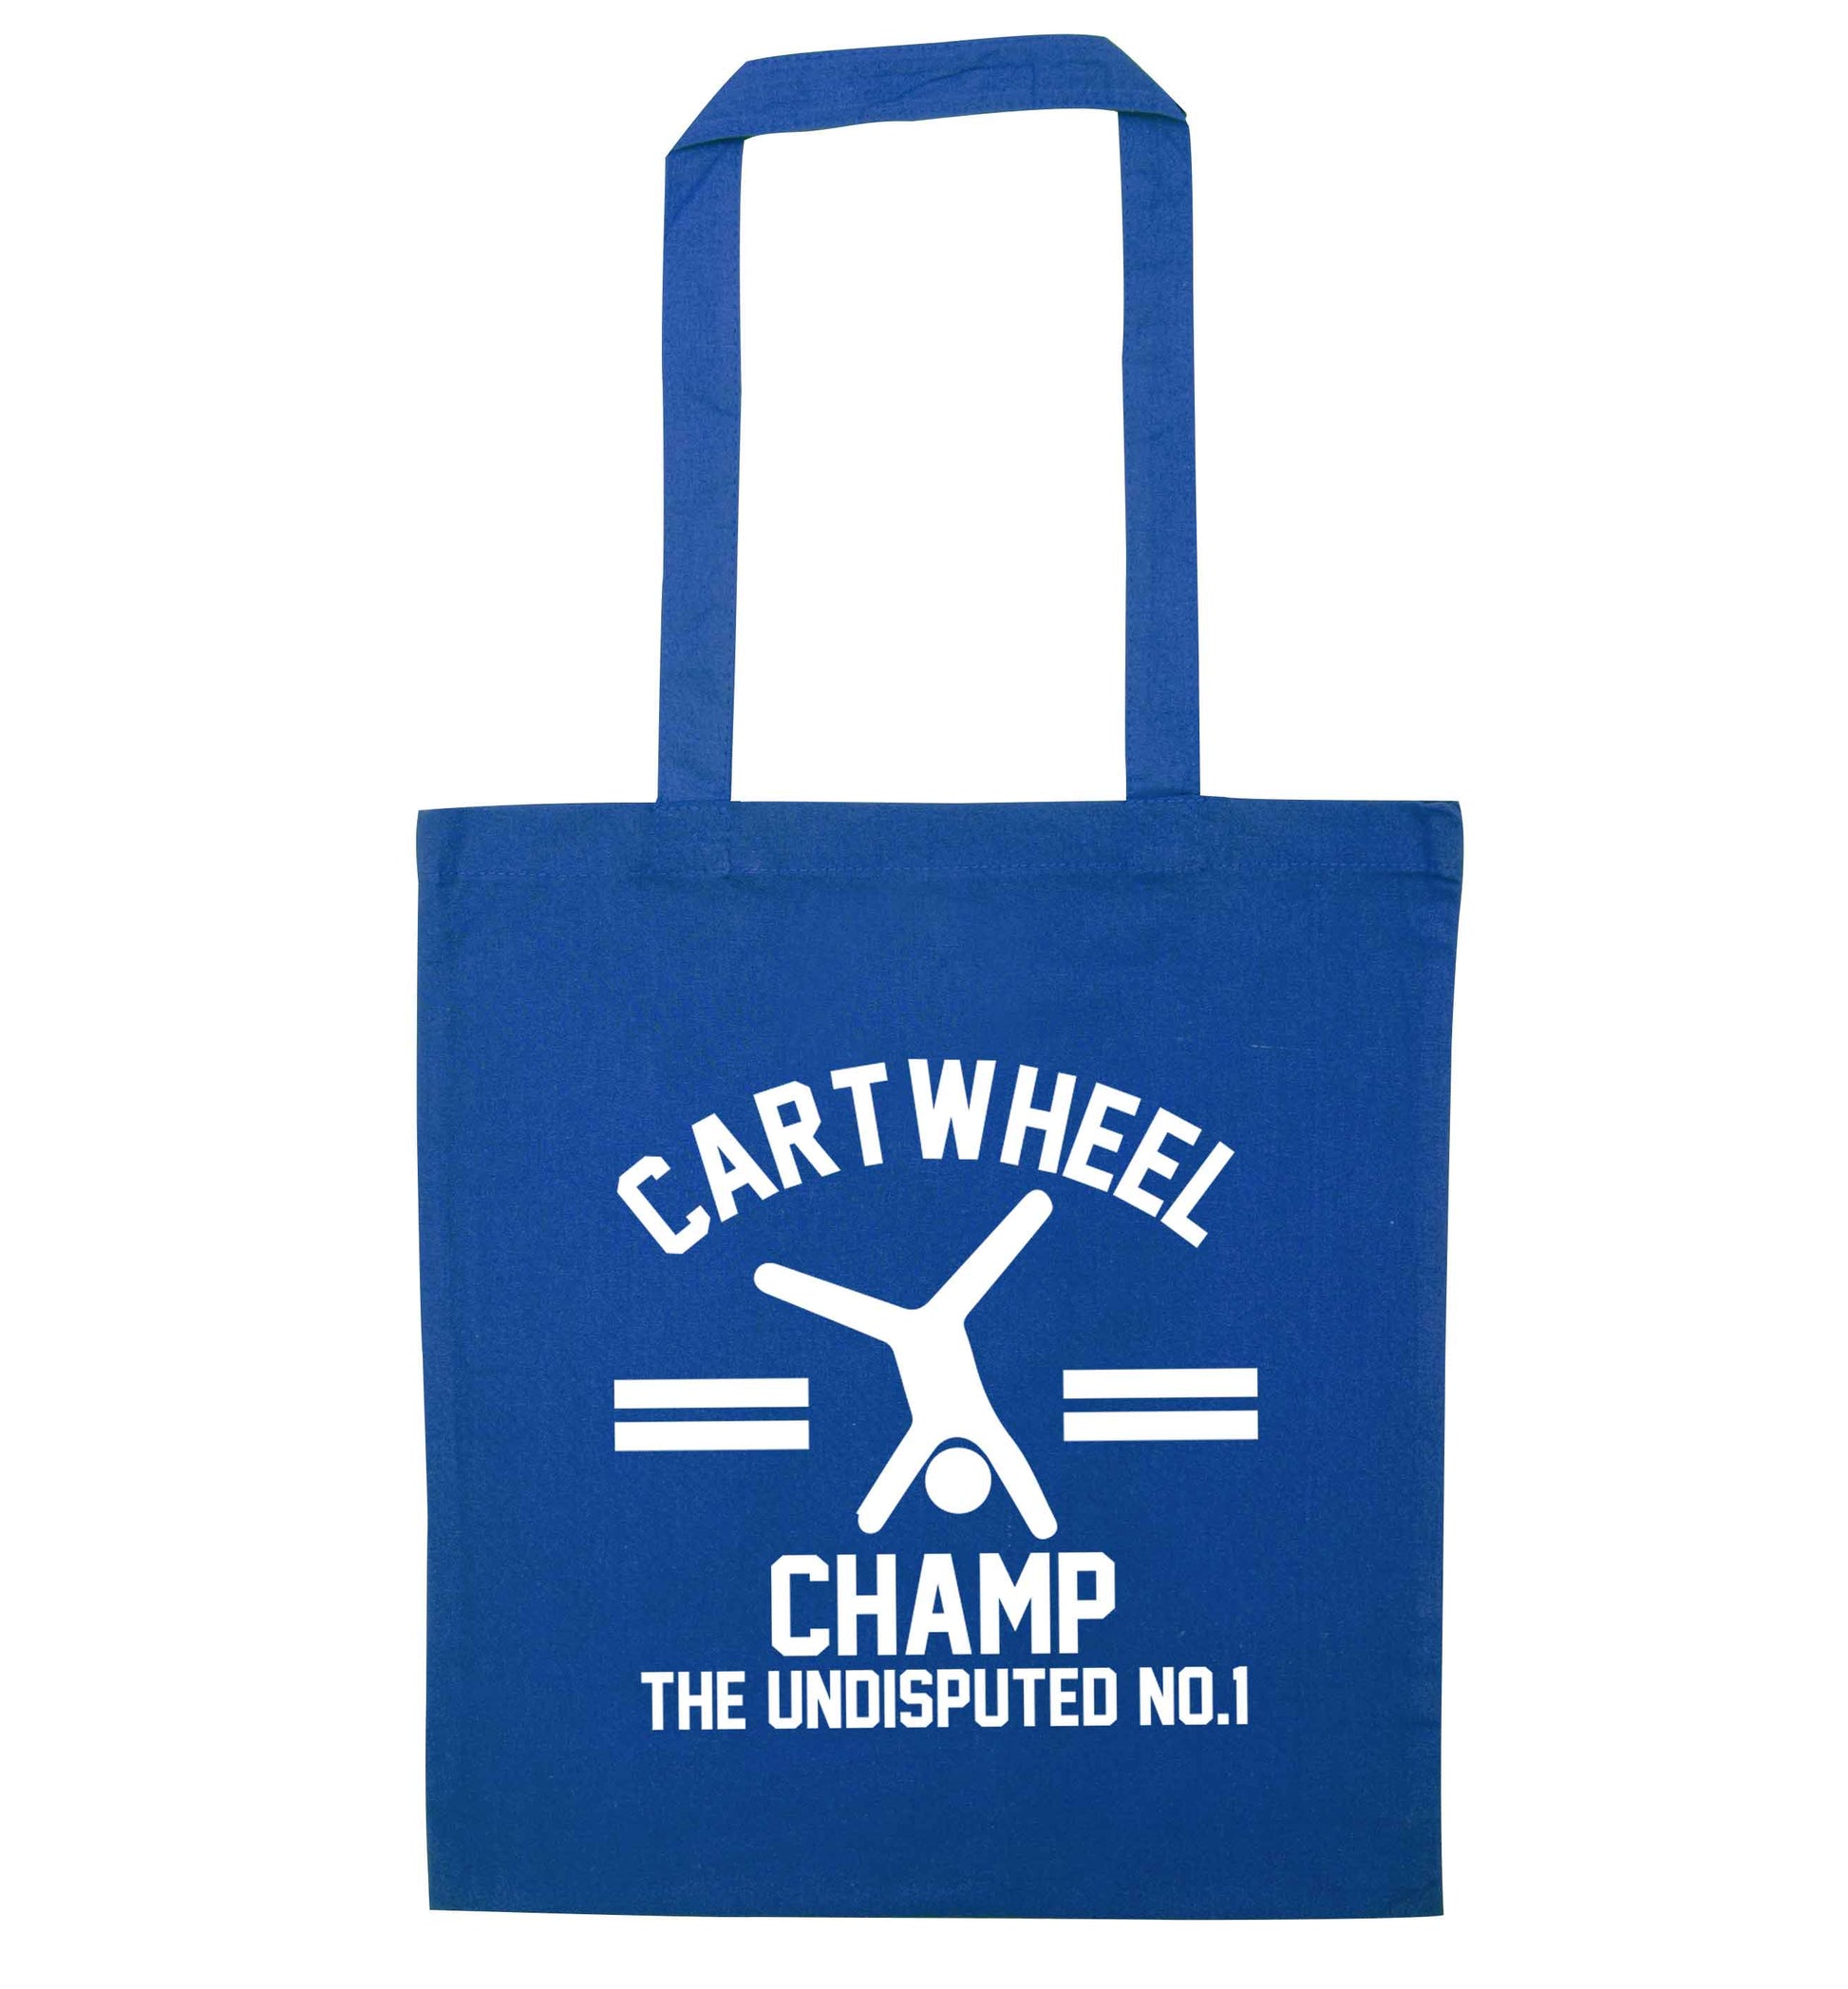 Undisputed cartwheel championship no.1  blue tote bag